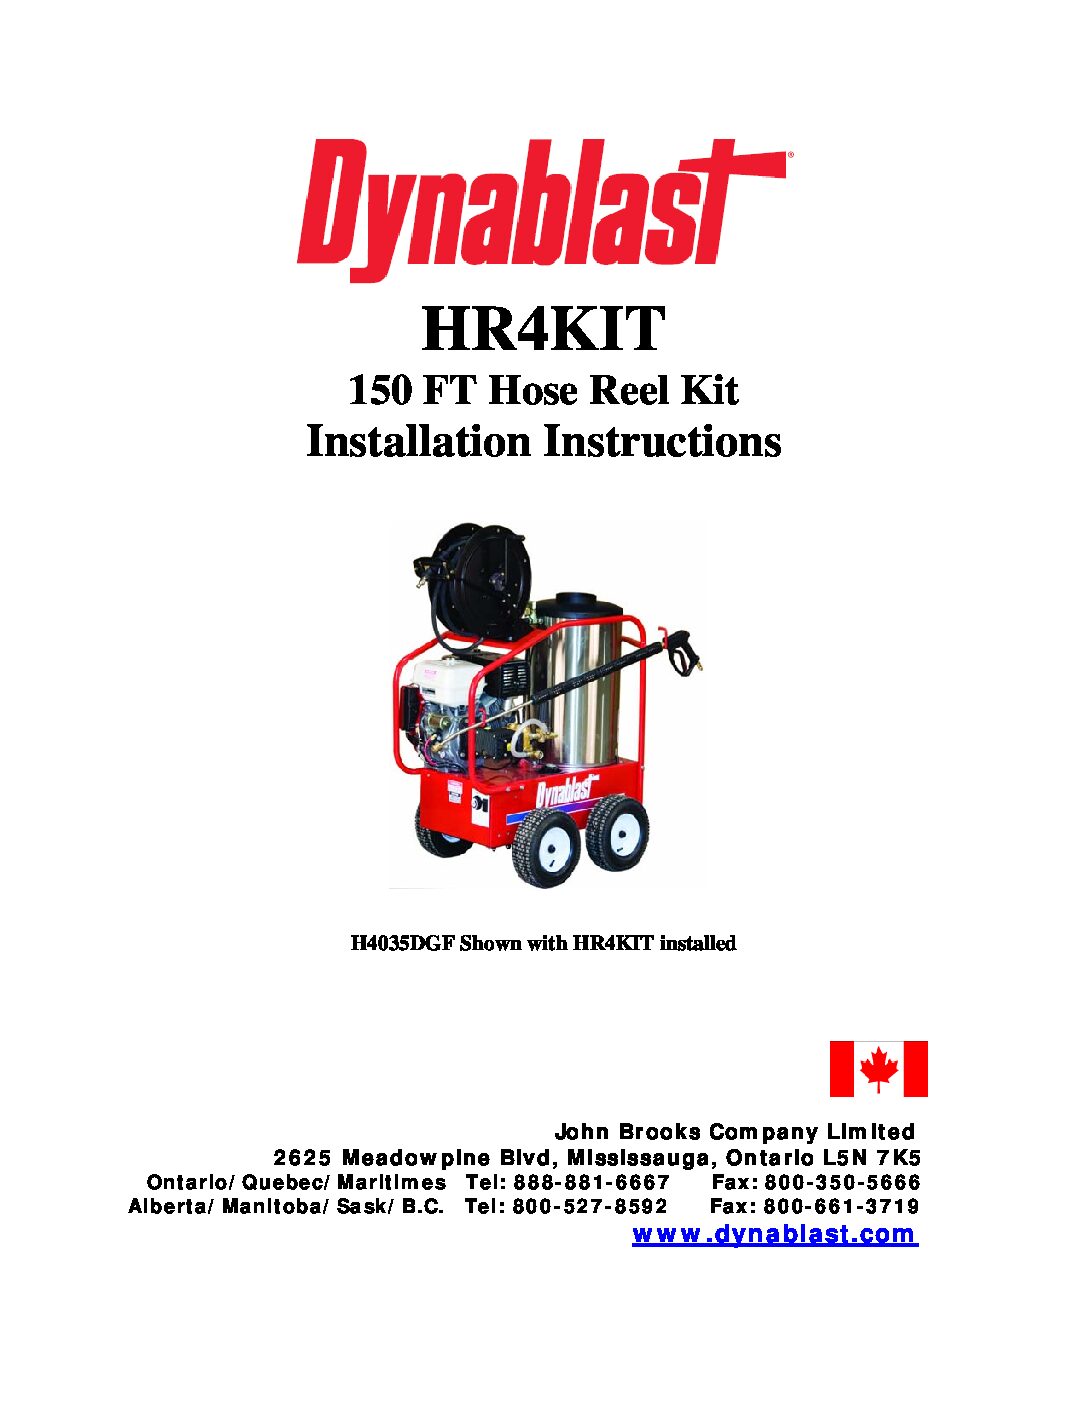 HR4KIT 150ft Hot Water Hose Reel Kit for Dynablast Hot Water